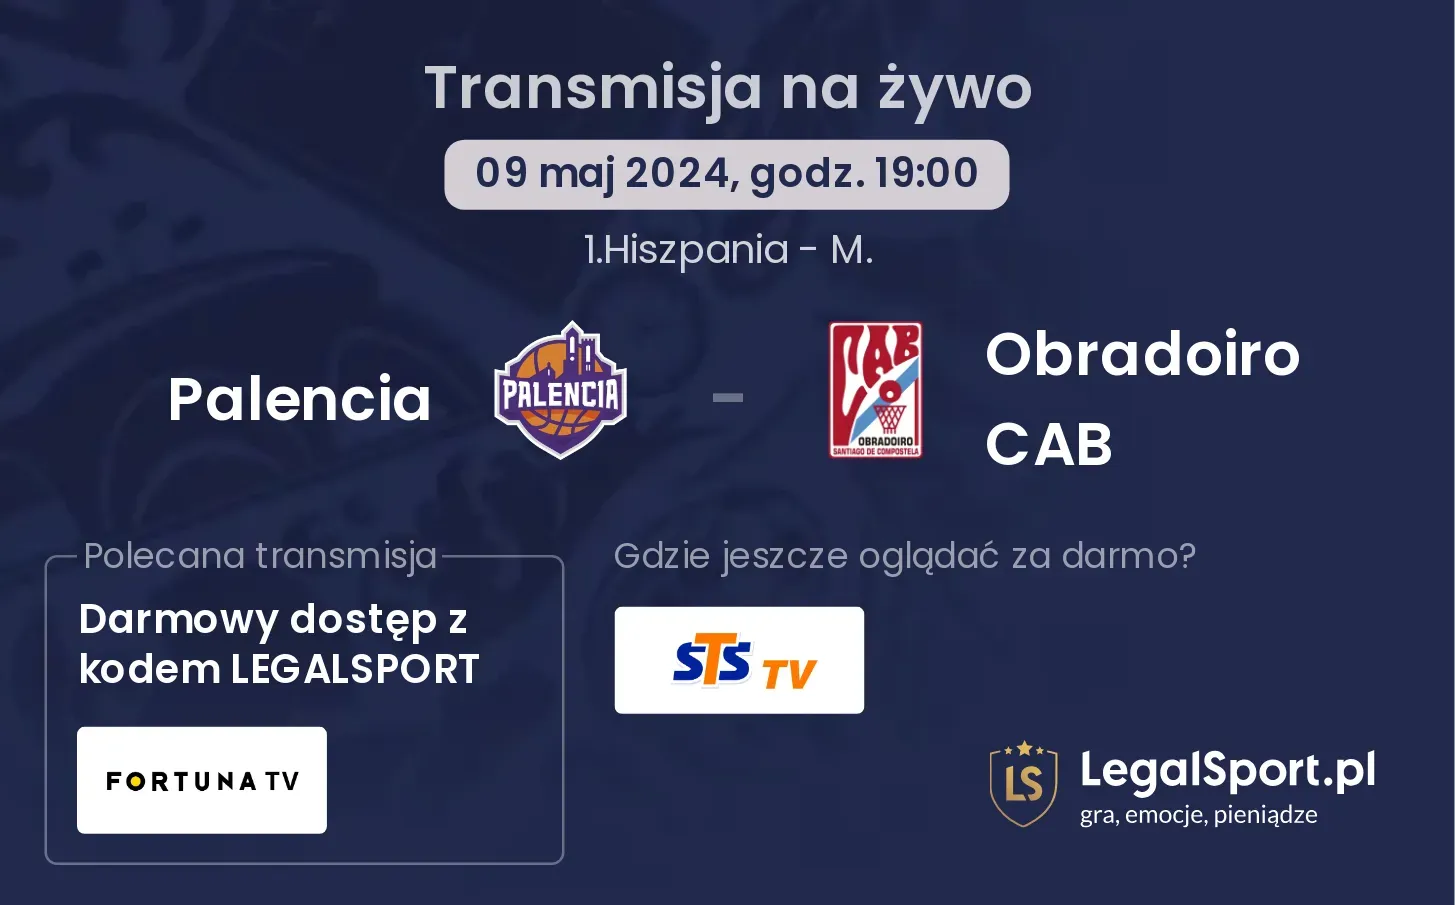 Palencia - Obradoiro CAB transmisja na żywo